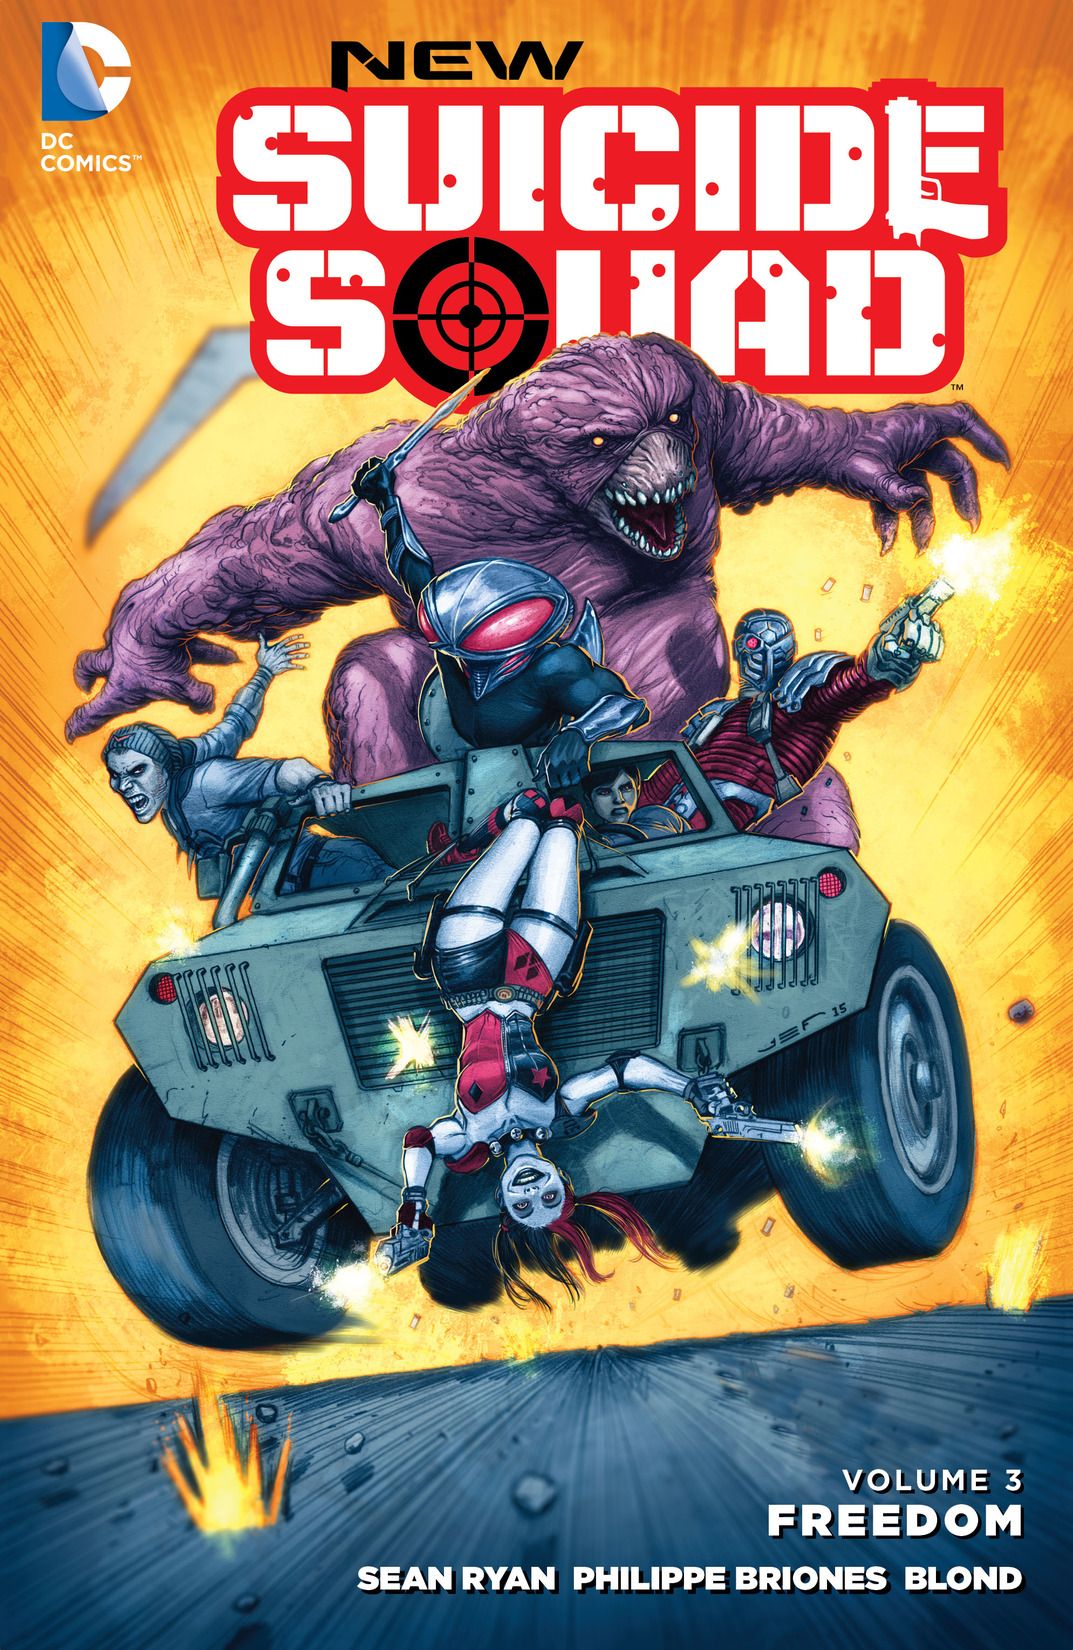 New Suicide Squad Graphic Novel Volume 3 Freedom